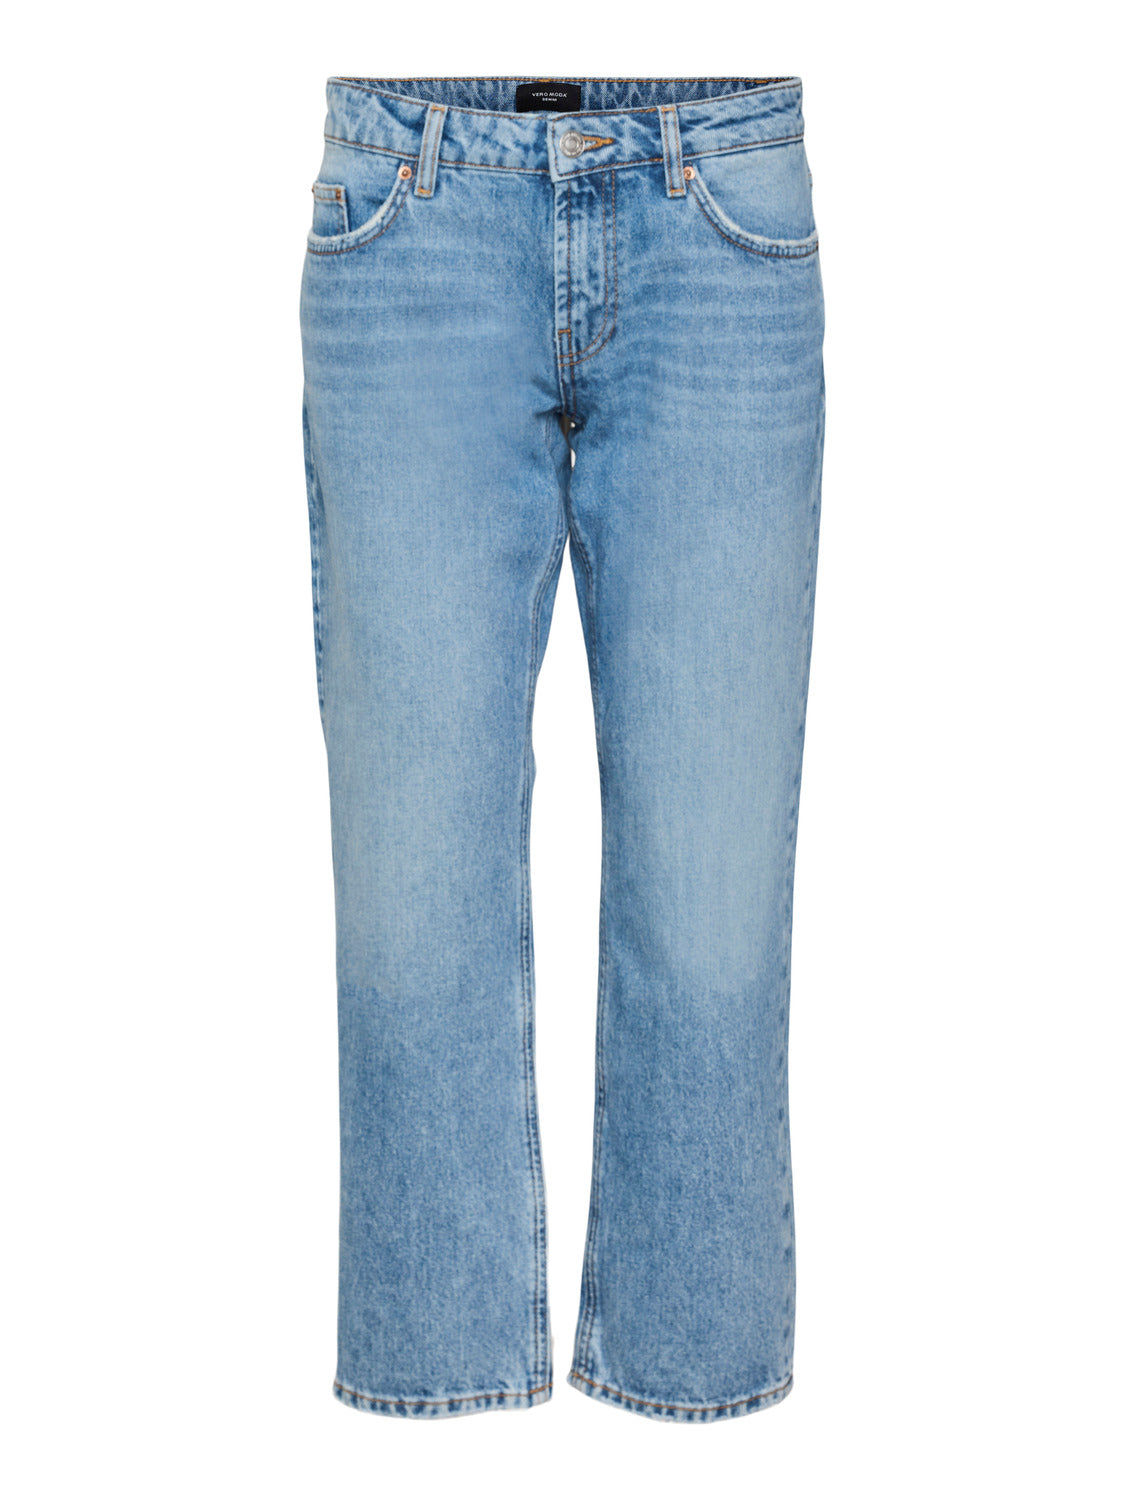 VM90S Jeans - Medium Blue Denim